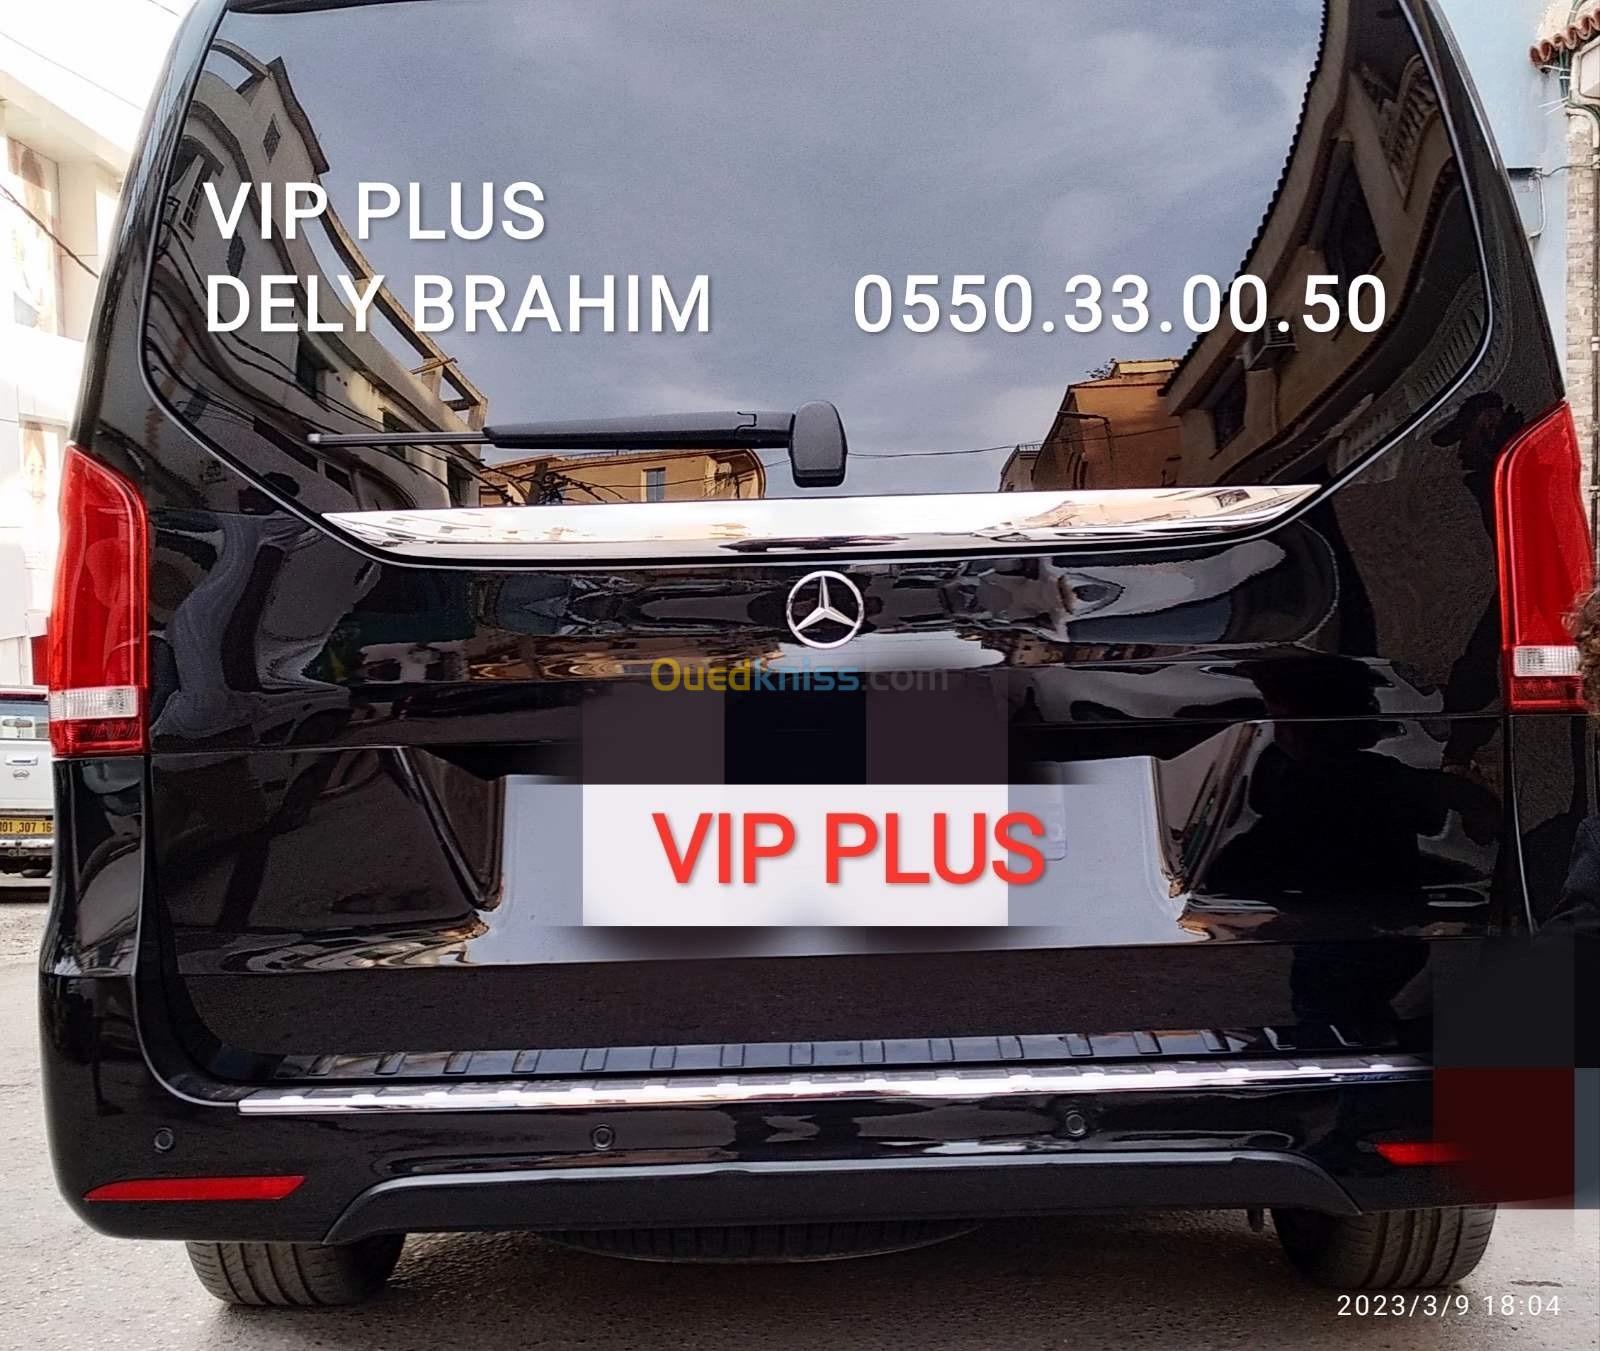 Location Mercedes classe V , délégation , taransfert VIP